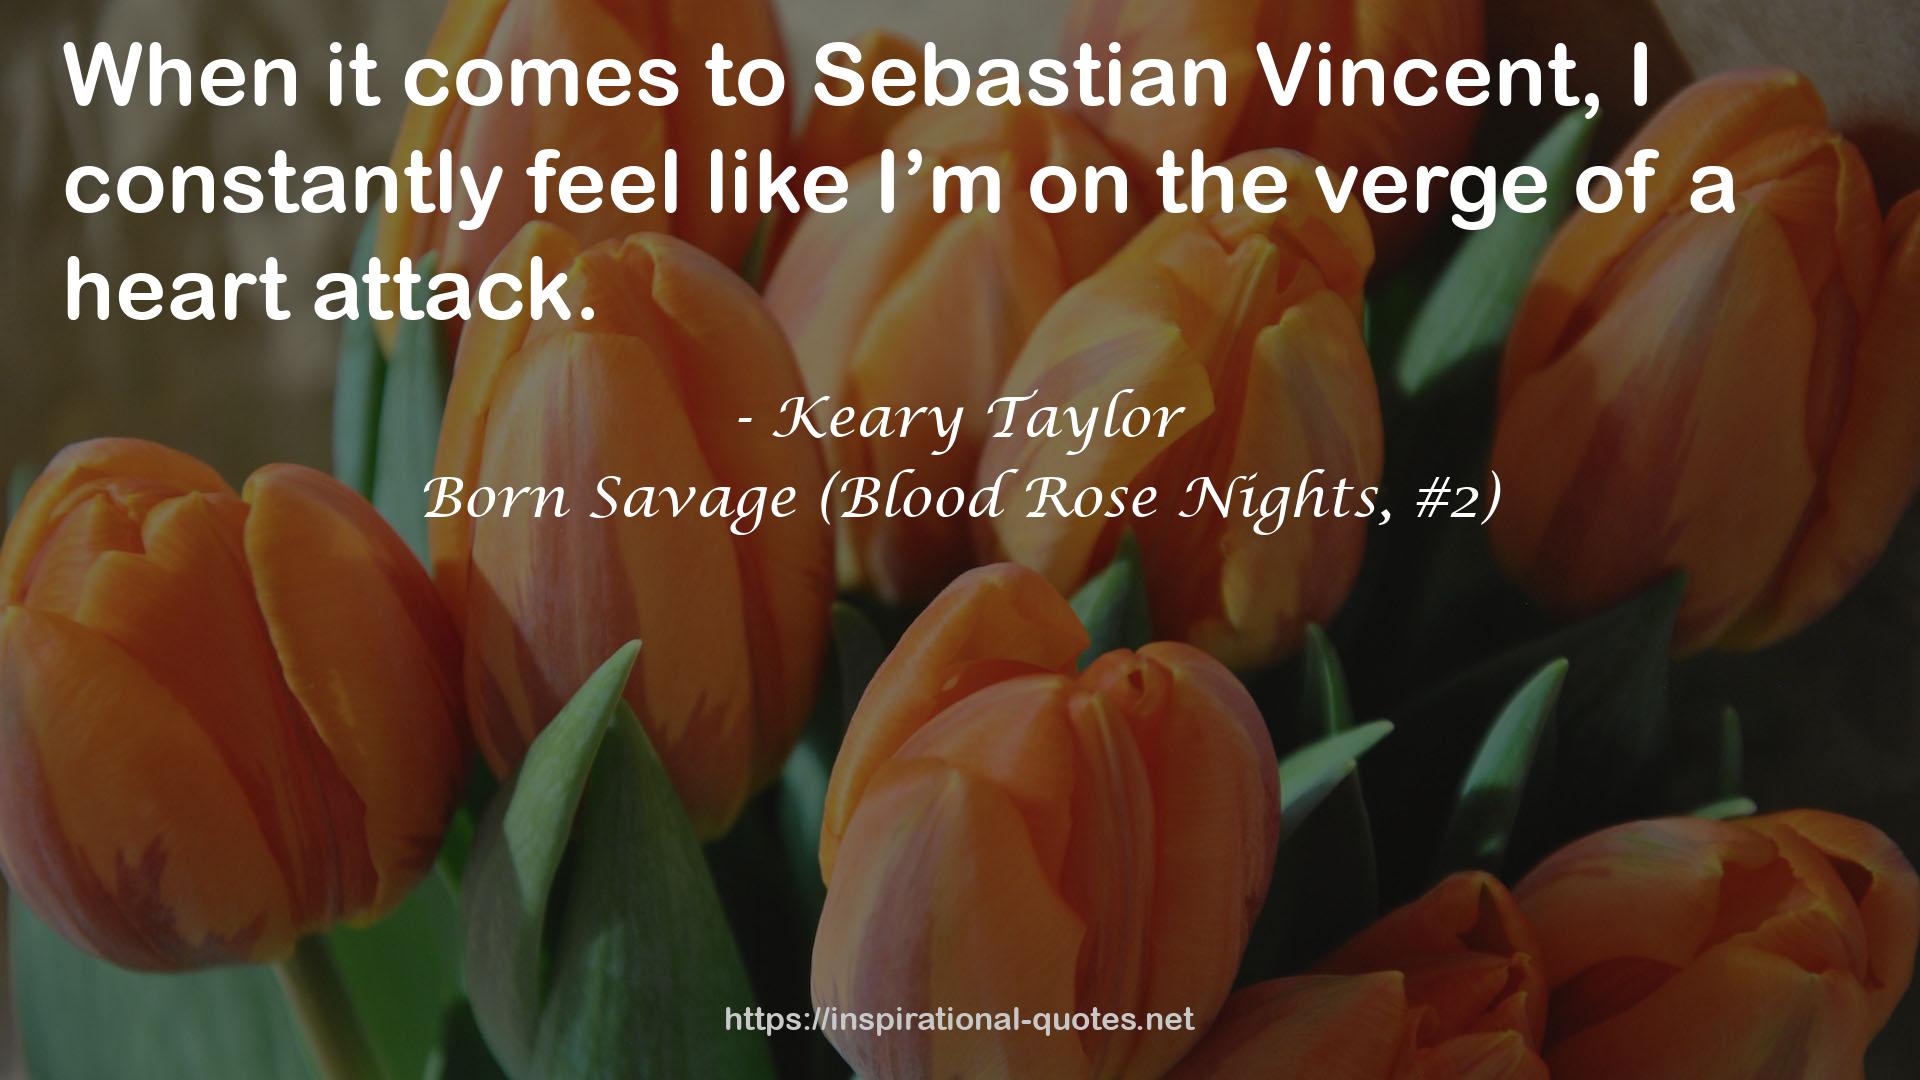 Born Savage (Blood Rose Nights, #2) QUOTES